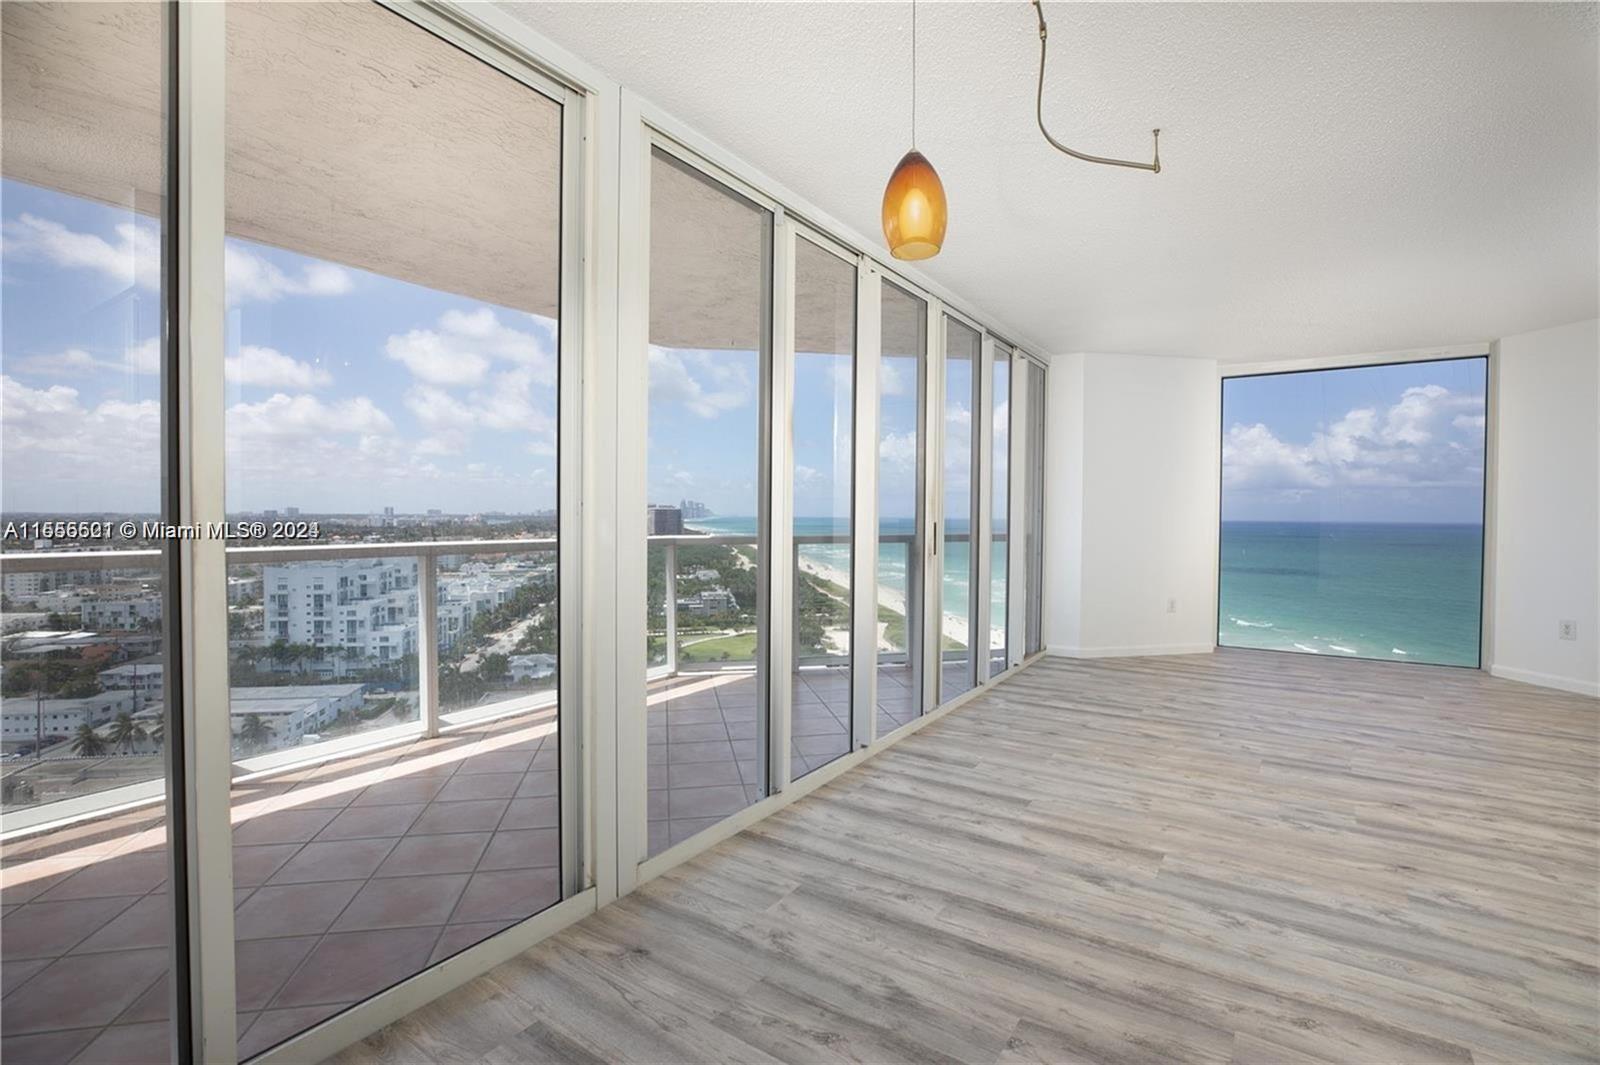 Property for Sale at 7330 Ocean Ter 21-D, Miami Beach, Miami-Dade County, Florida - Bedrooms: 2 
Bathrooms: 2  - $1,595,000